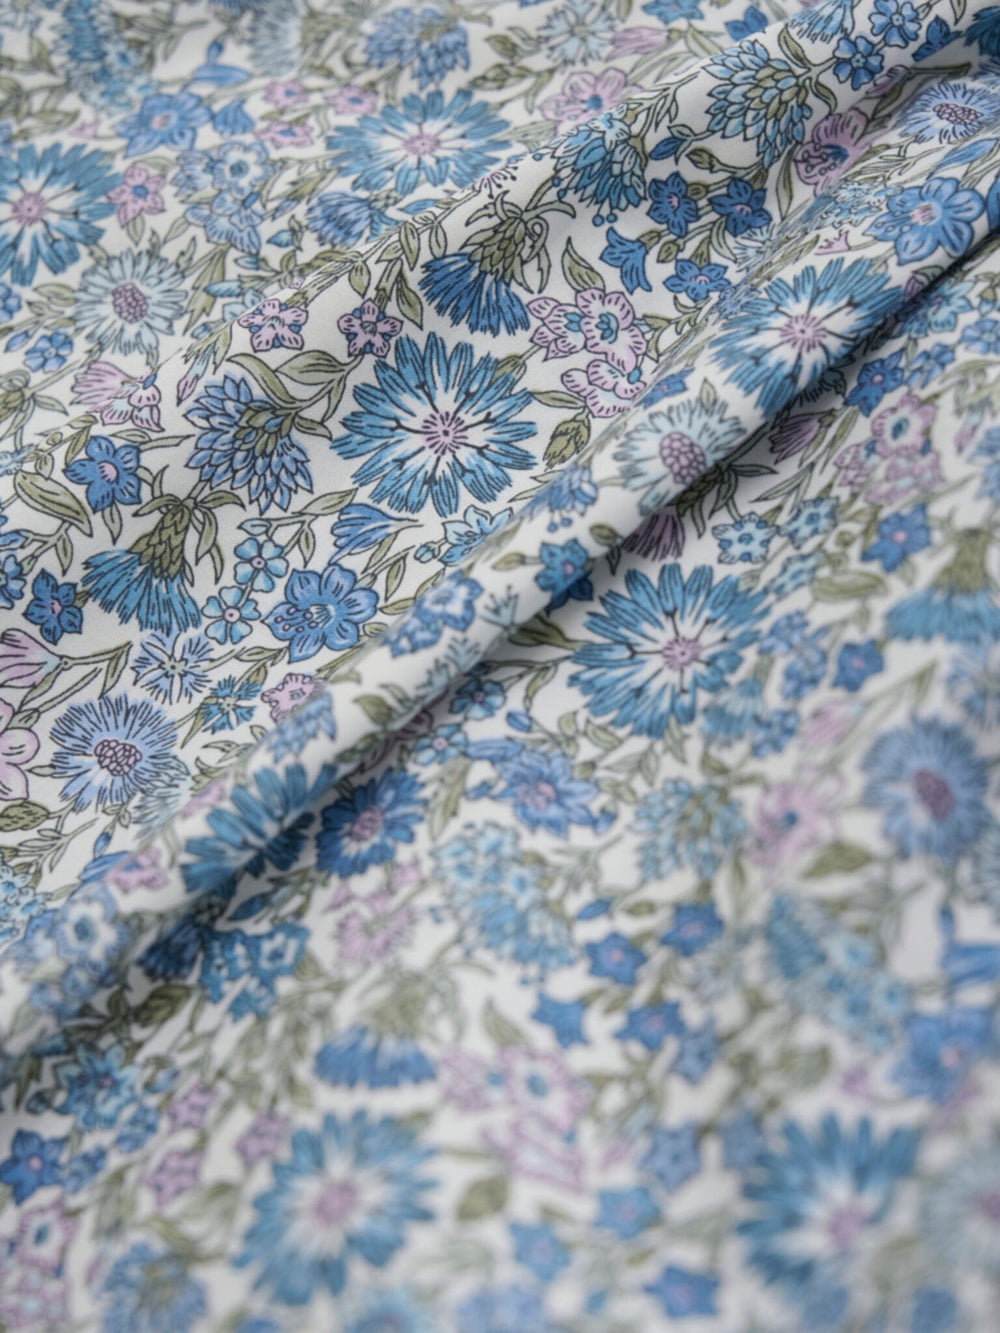 Huttelihut - Skirt In Liberty Fabric - May Field Nederdele 